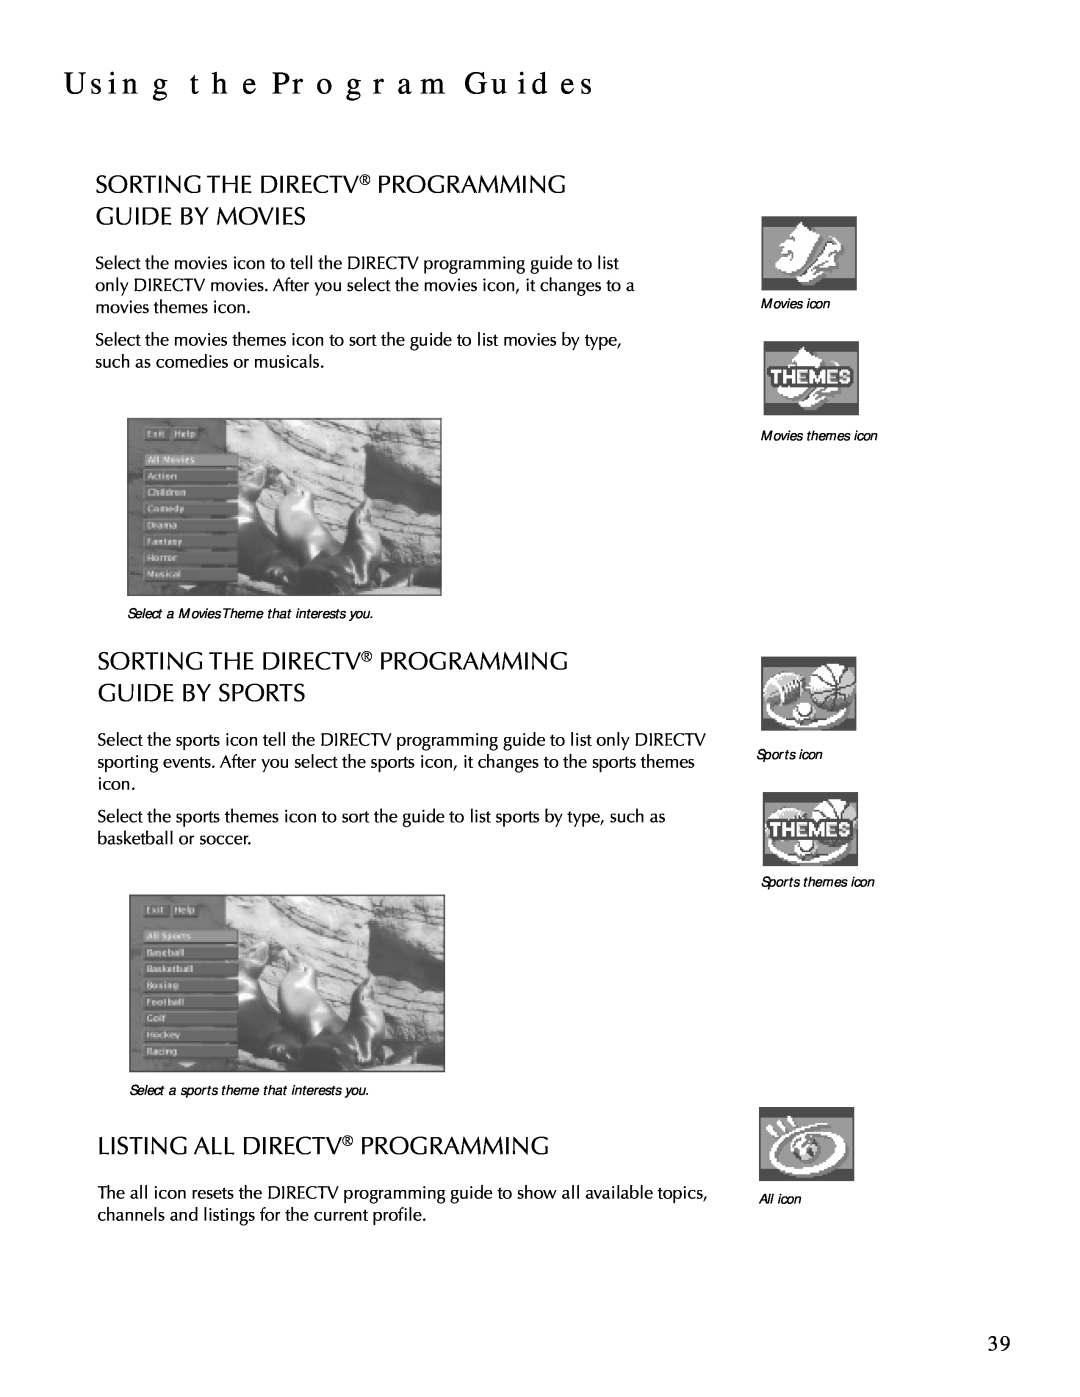 DirecTV HDTV user manual Sorting The Directv Programming Guide By Movies, Sorting The Directv Programming Guide By Sports 